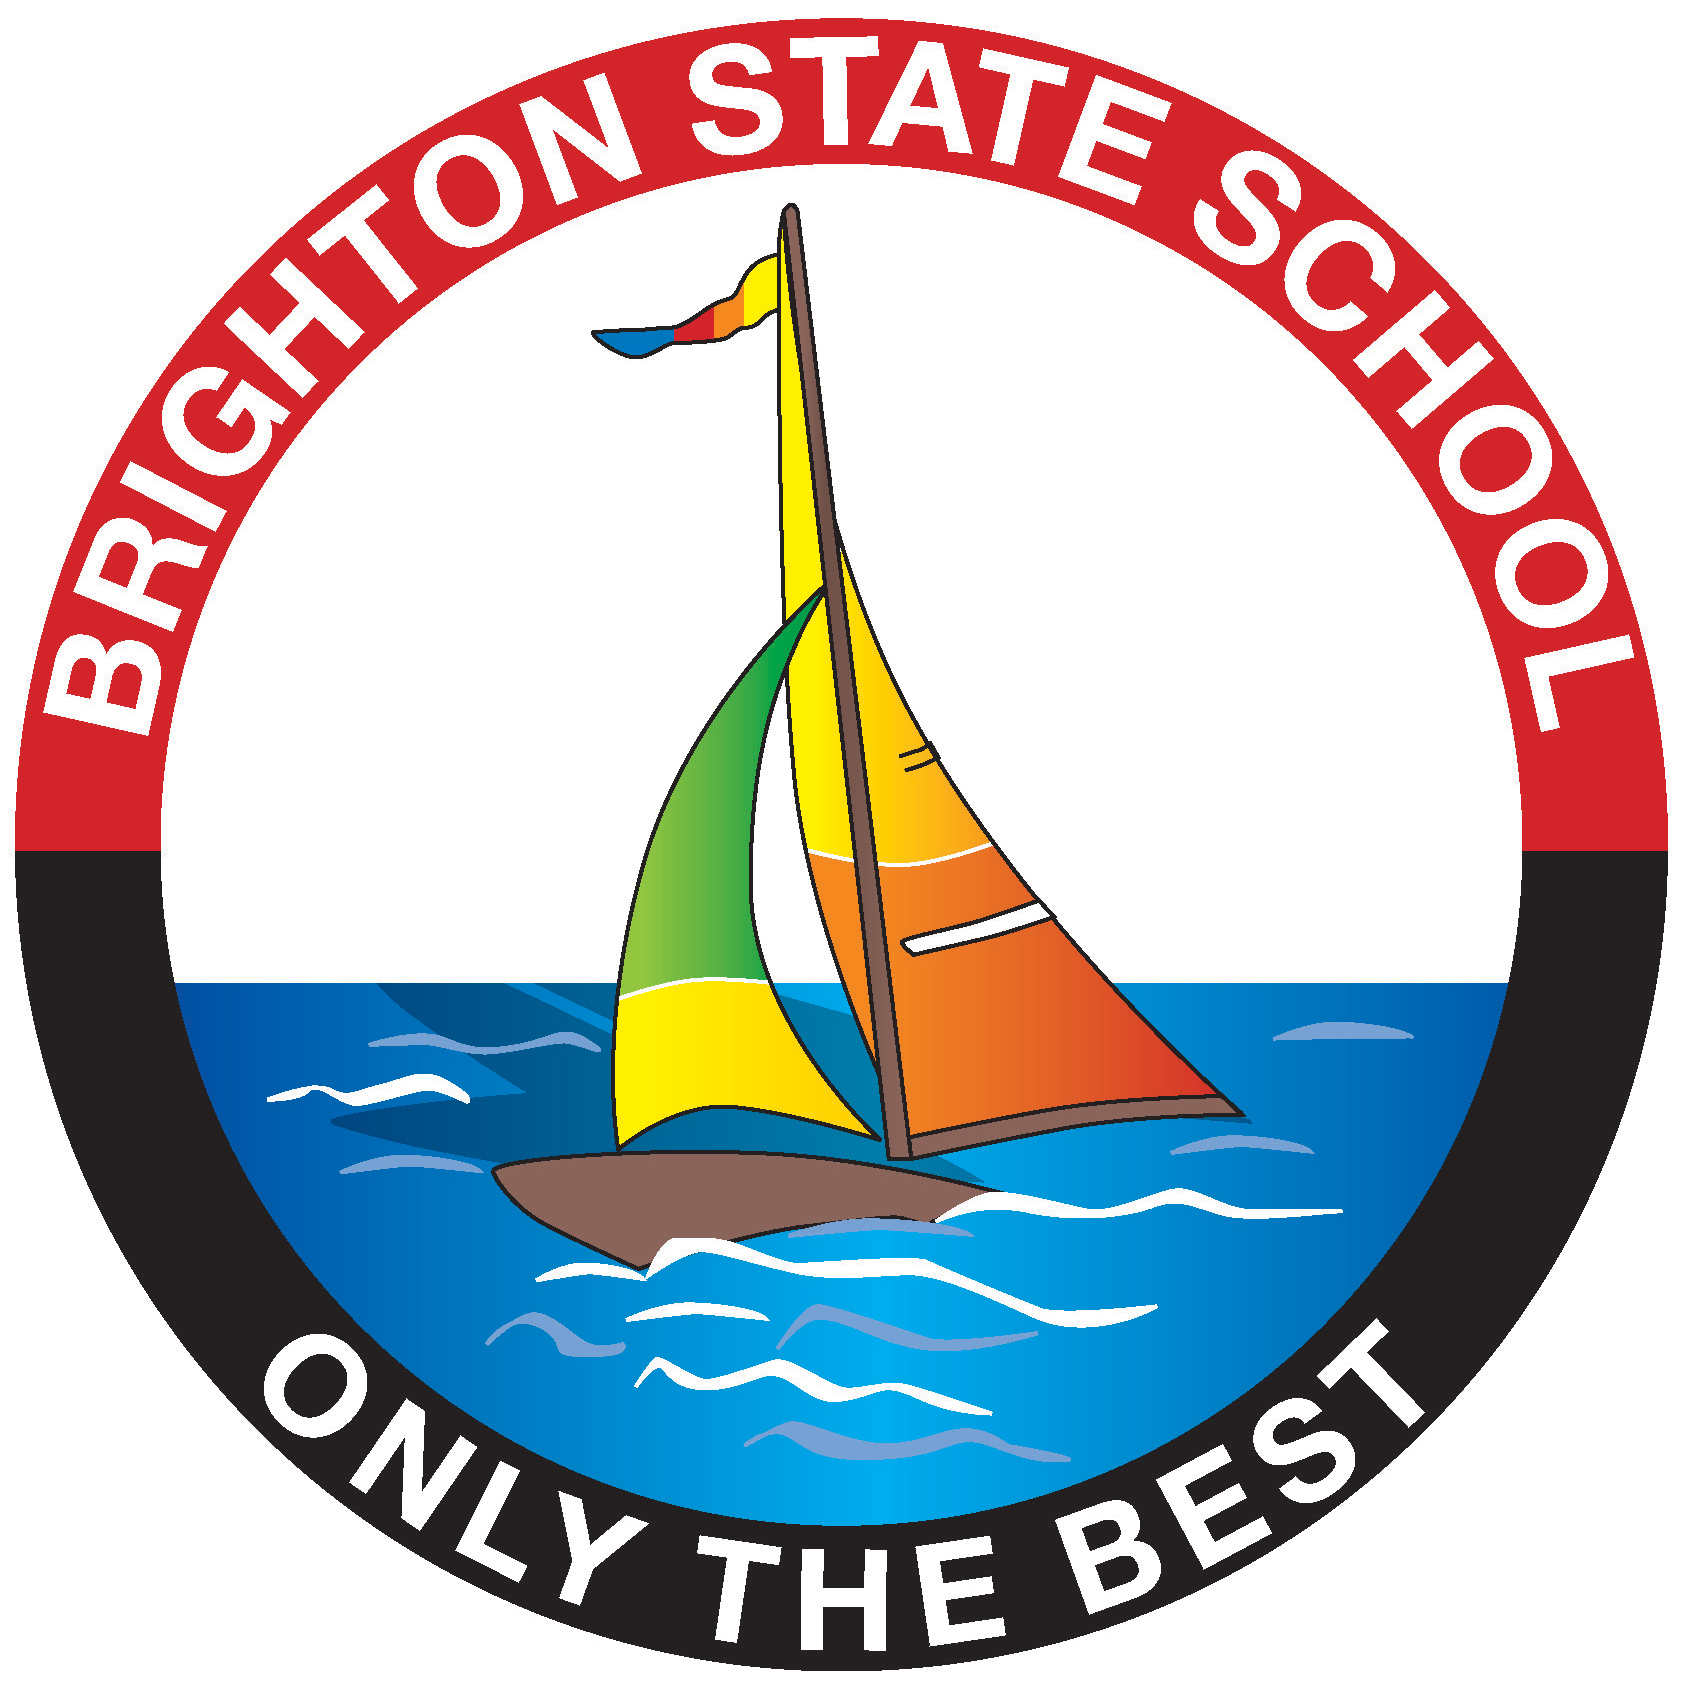 Brighton State School (QLD)